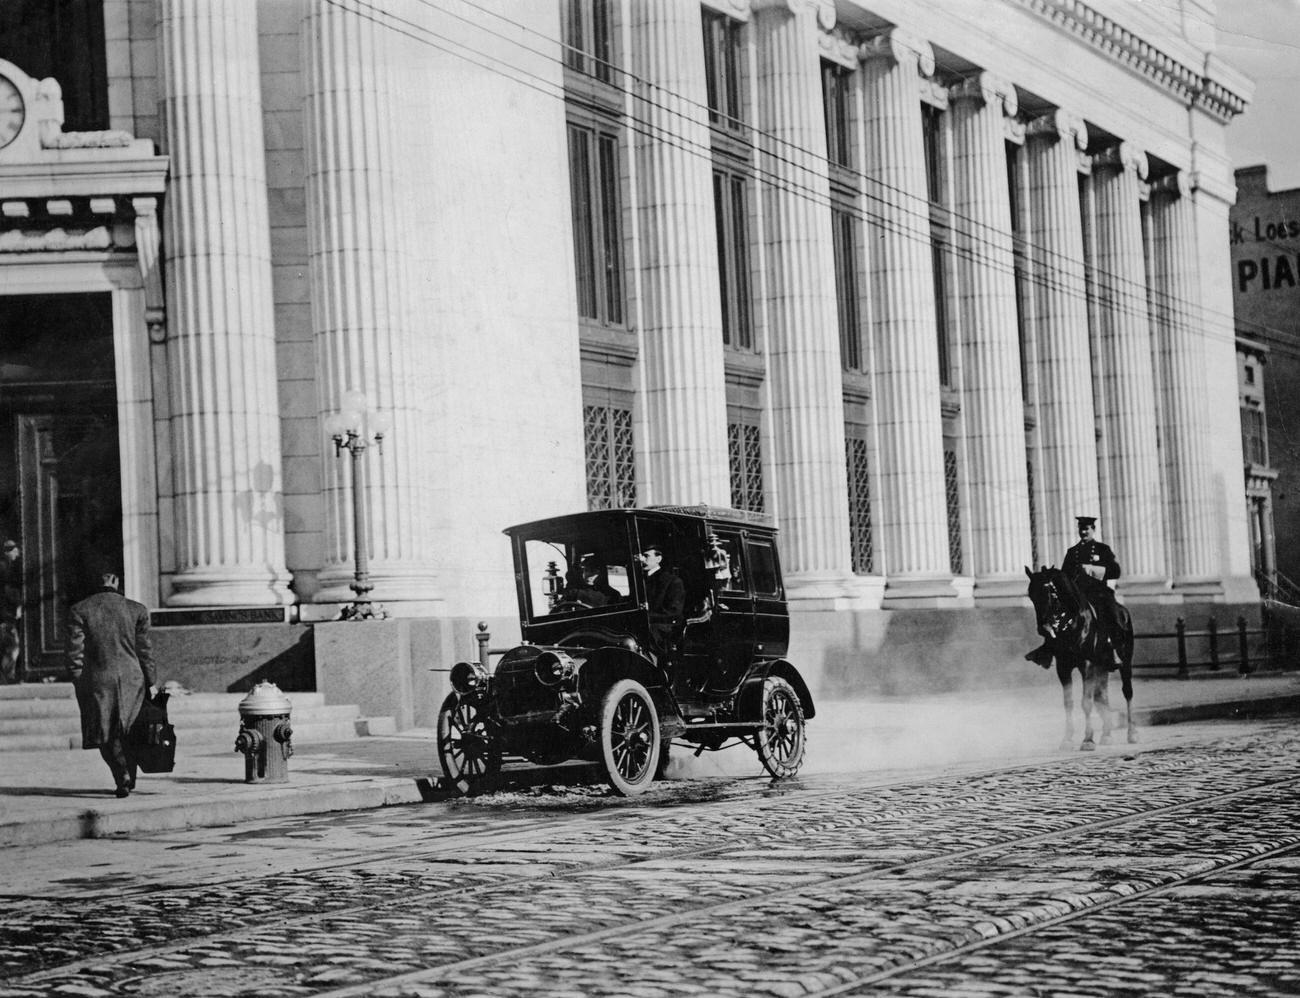 Early Taxi At Original Dime Savings Bank Headquarters On Dekalb Avenue, Brooklyn, 1910